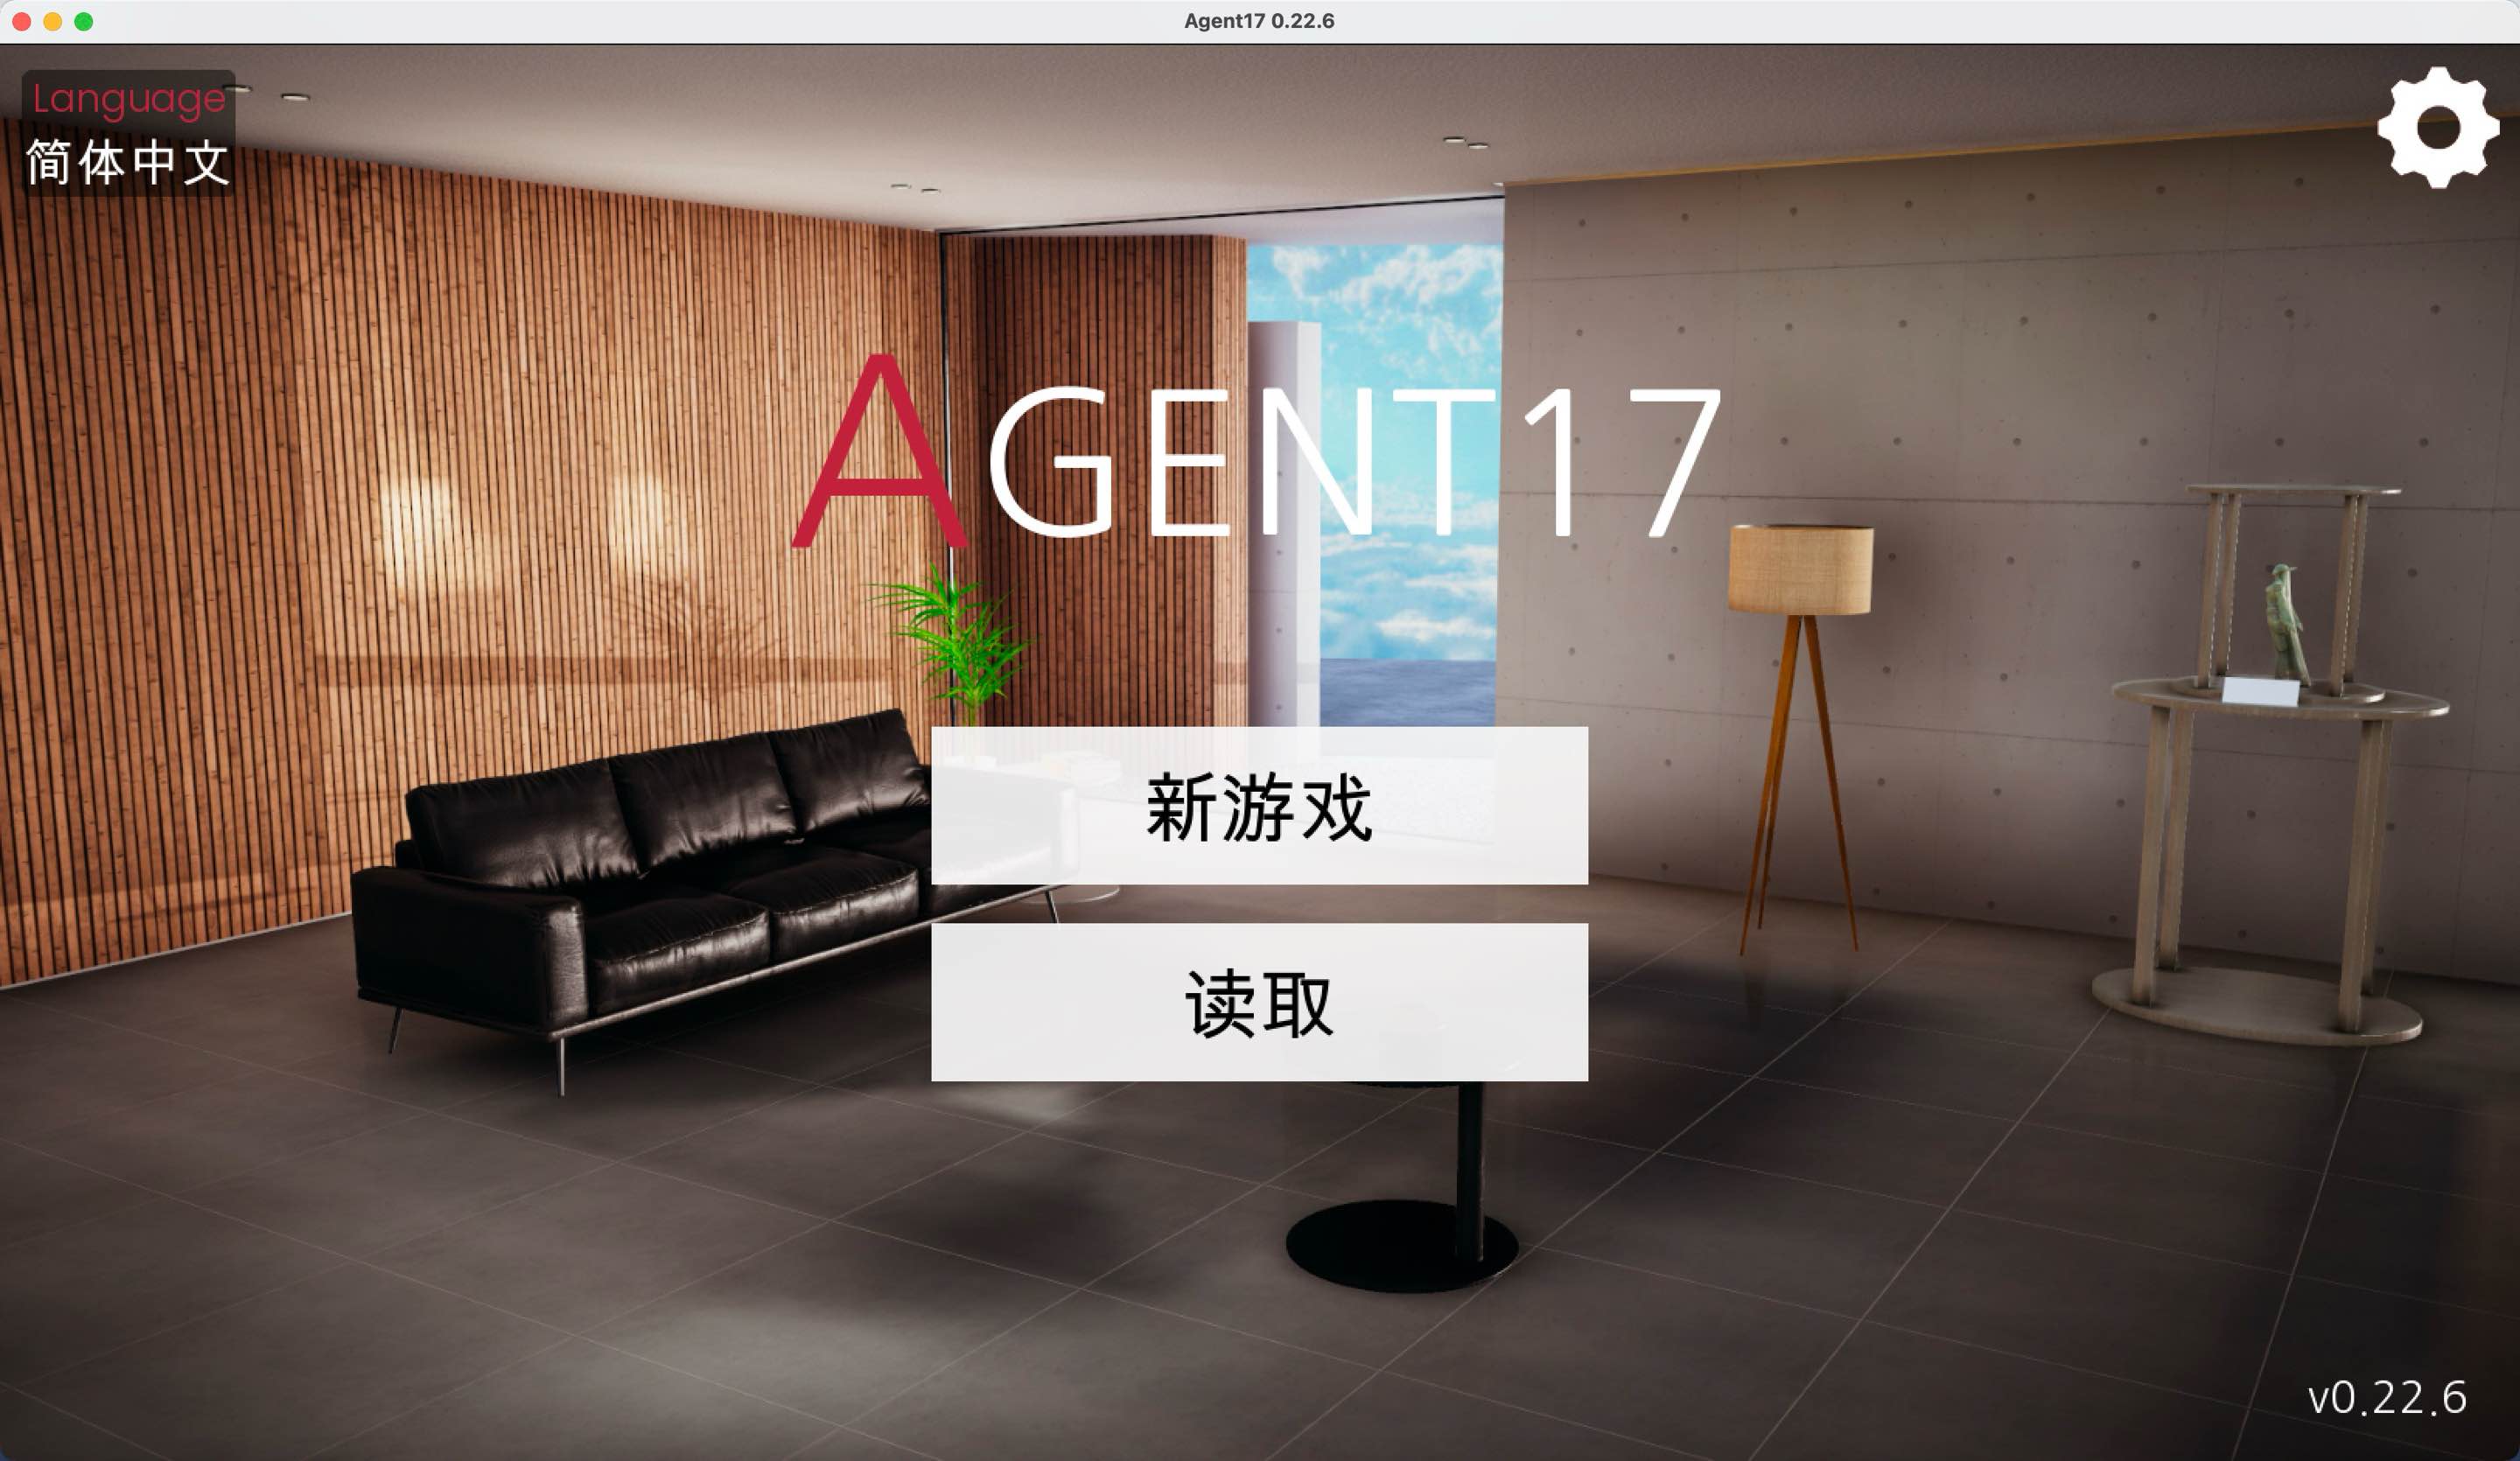 特工17 for Mac Agent17 v0.23.2 中文移植版 苹果电脑